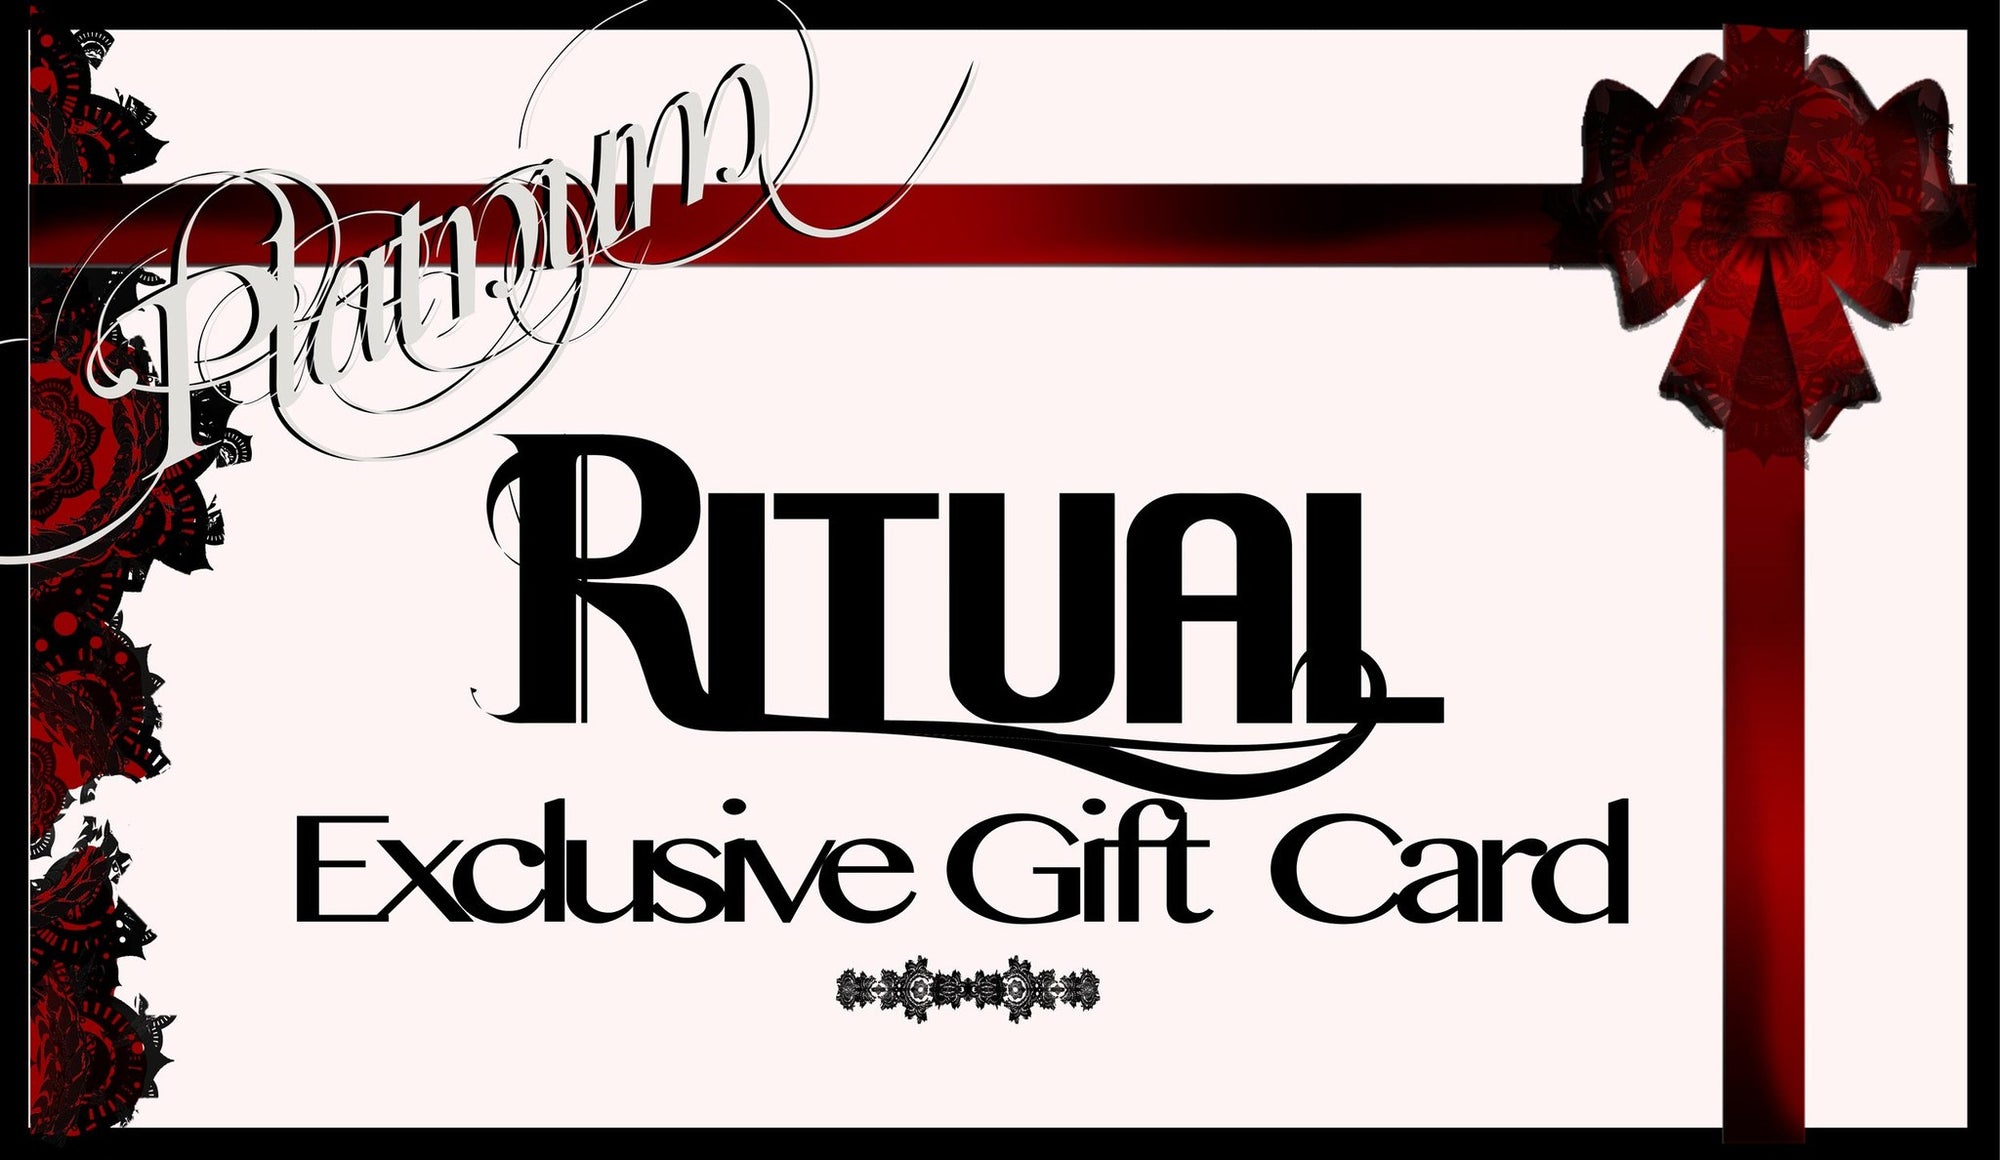 Gift Card - Platinum Gift Card